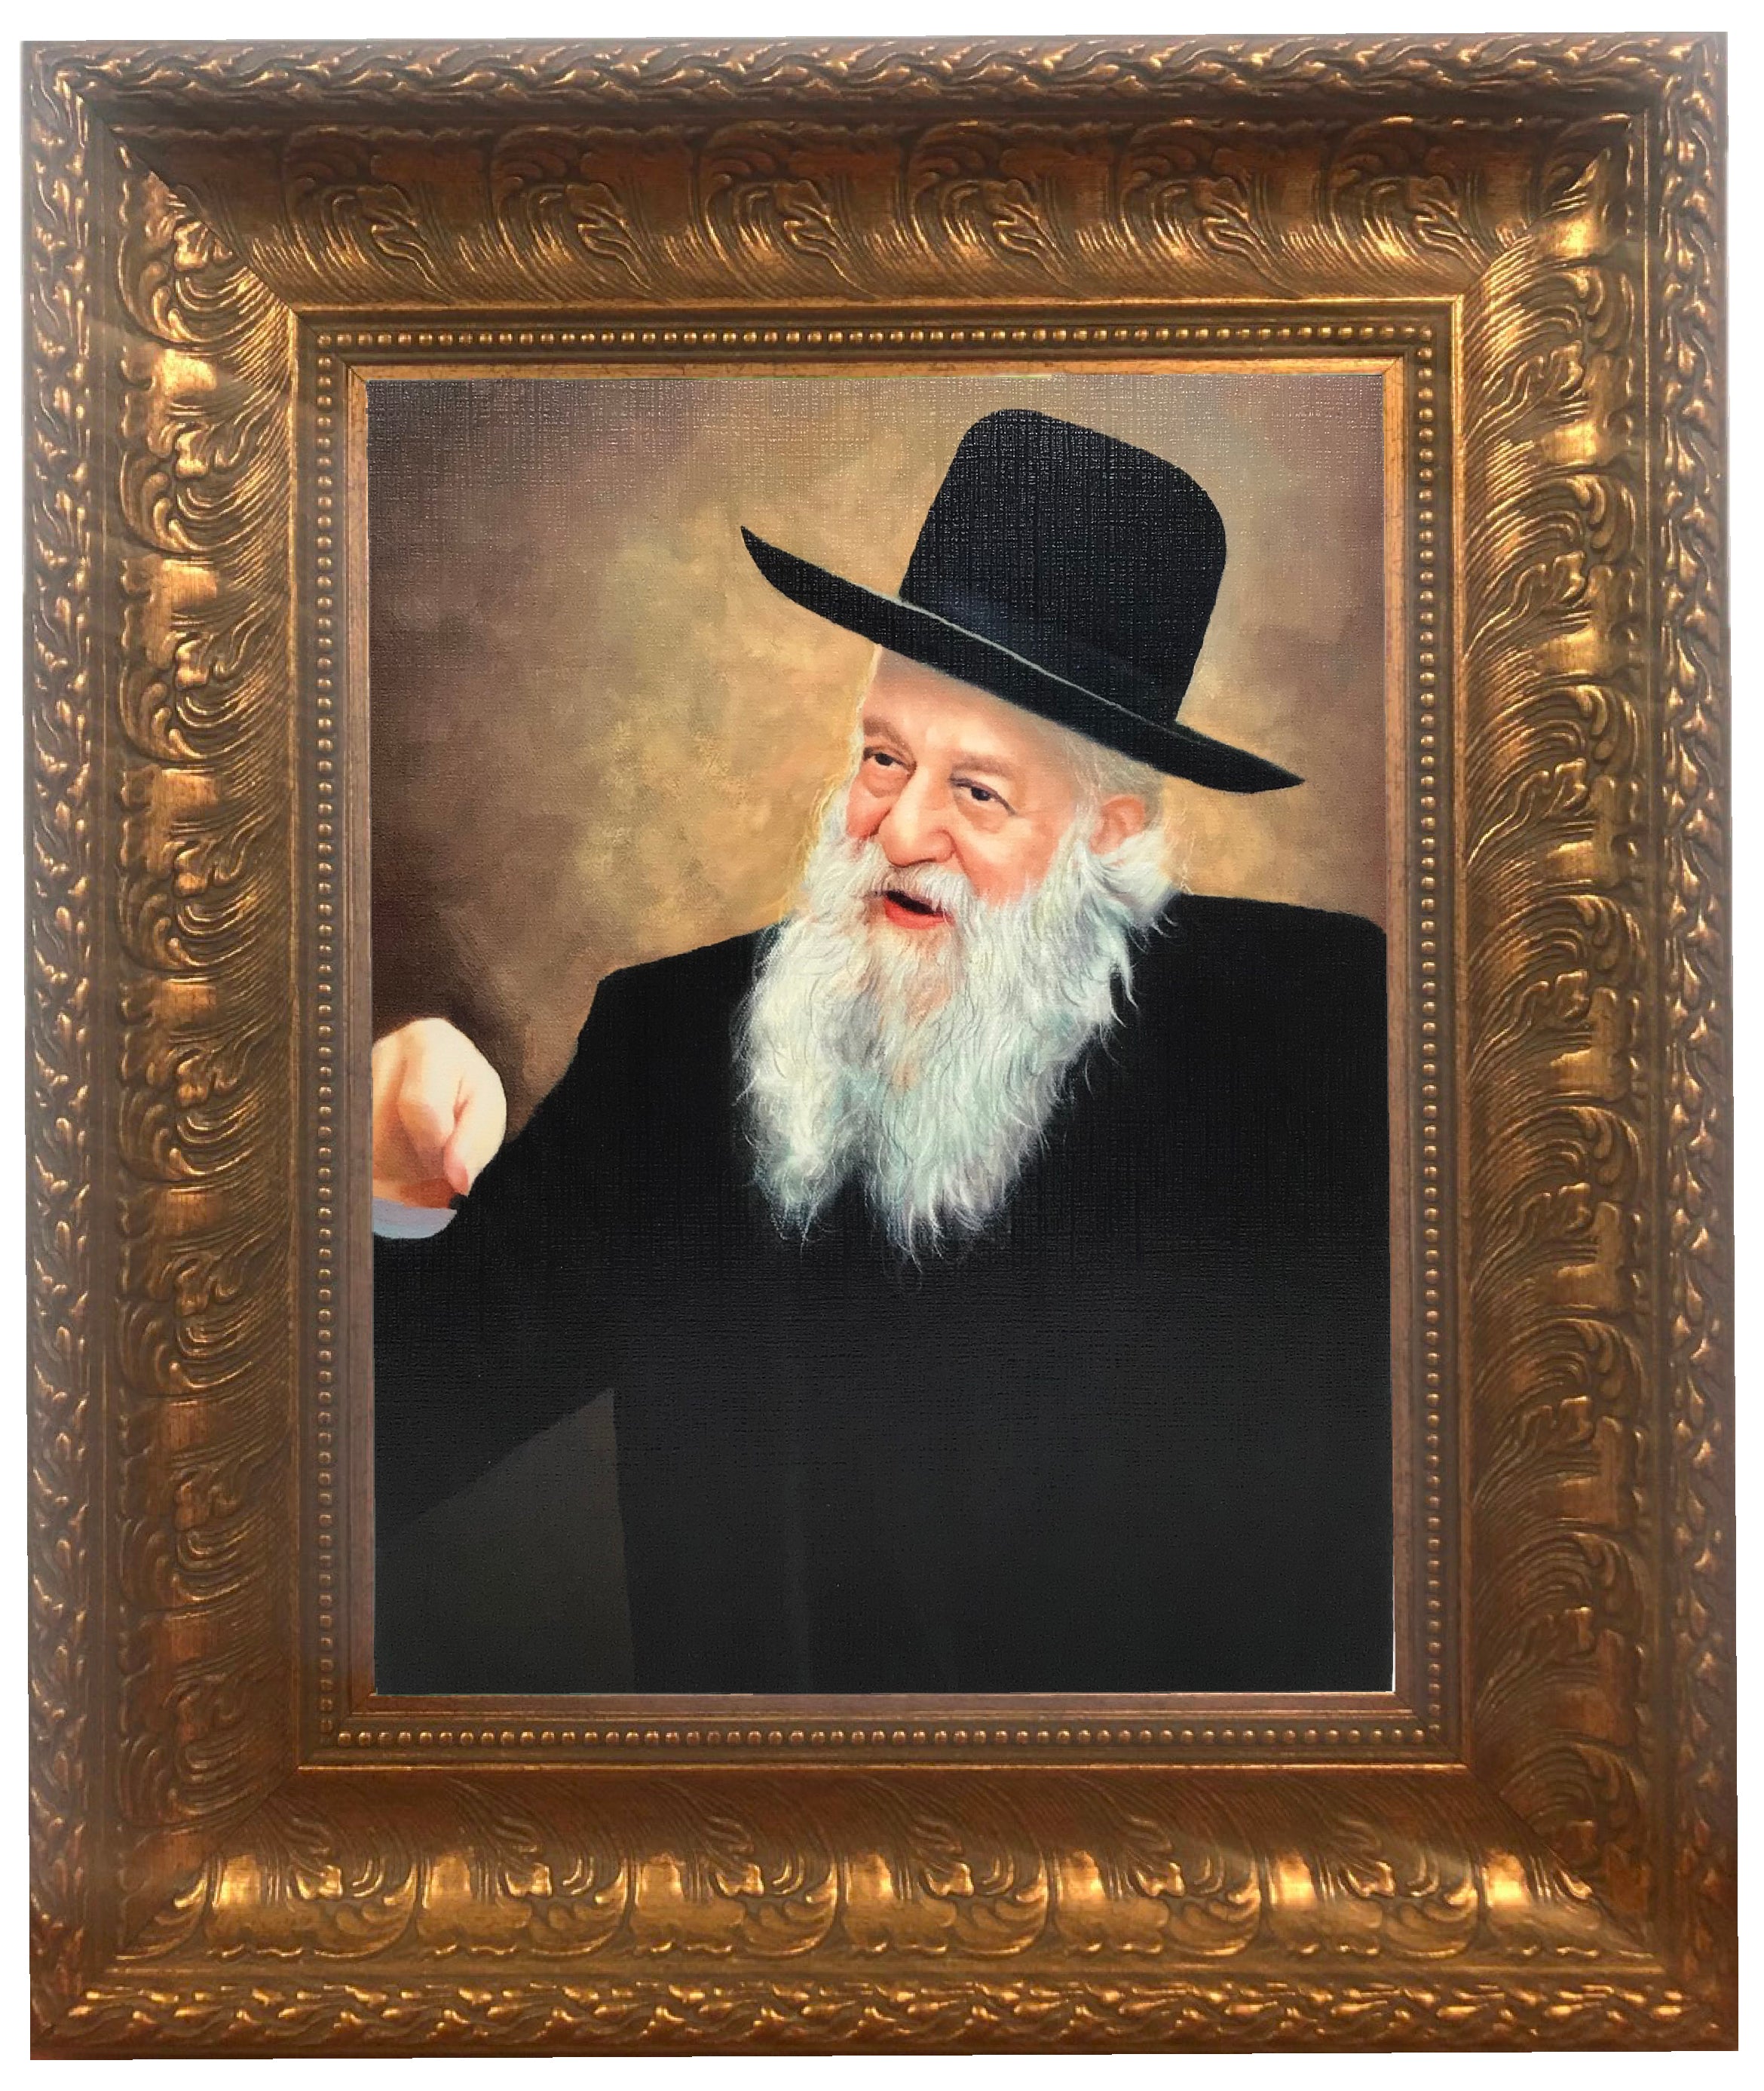 Rabbi Vachtfogel